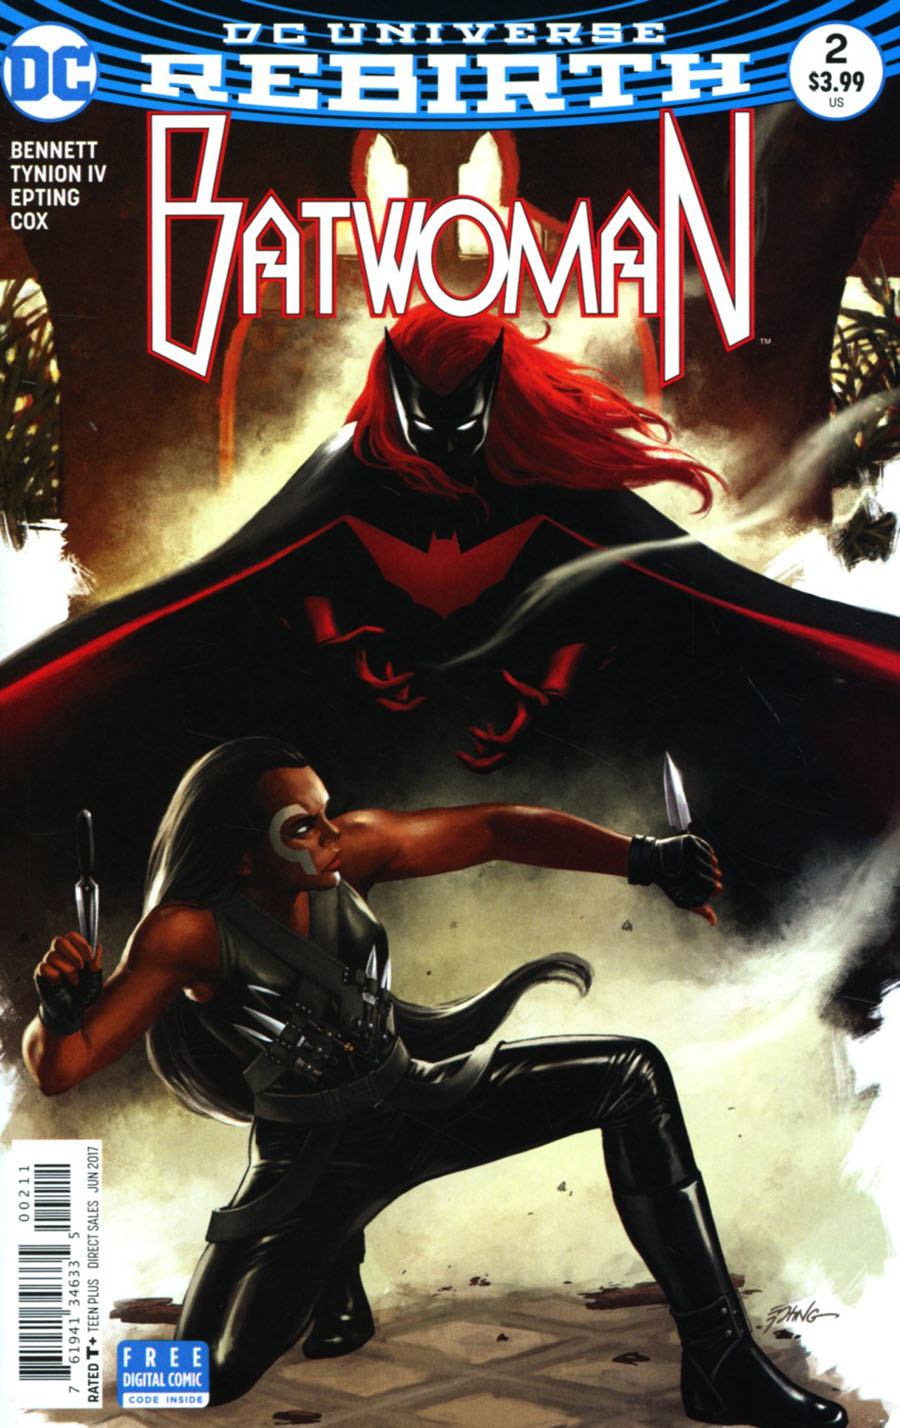 Batwoman Vol 2 #2 Cover A Regular Steve Epting Cover